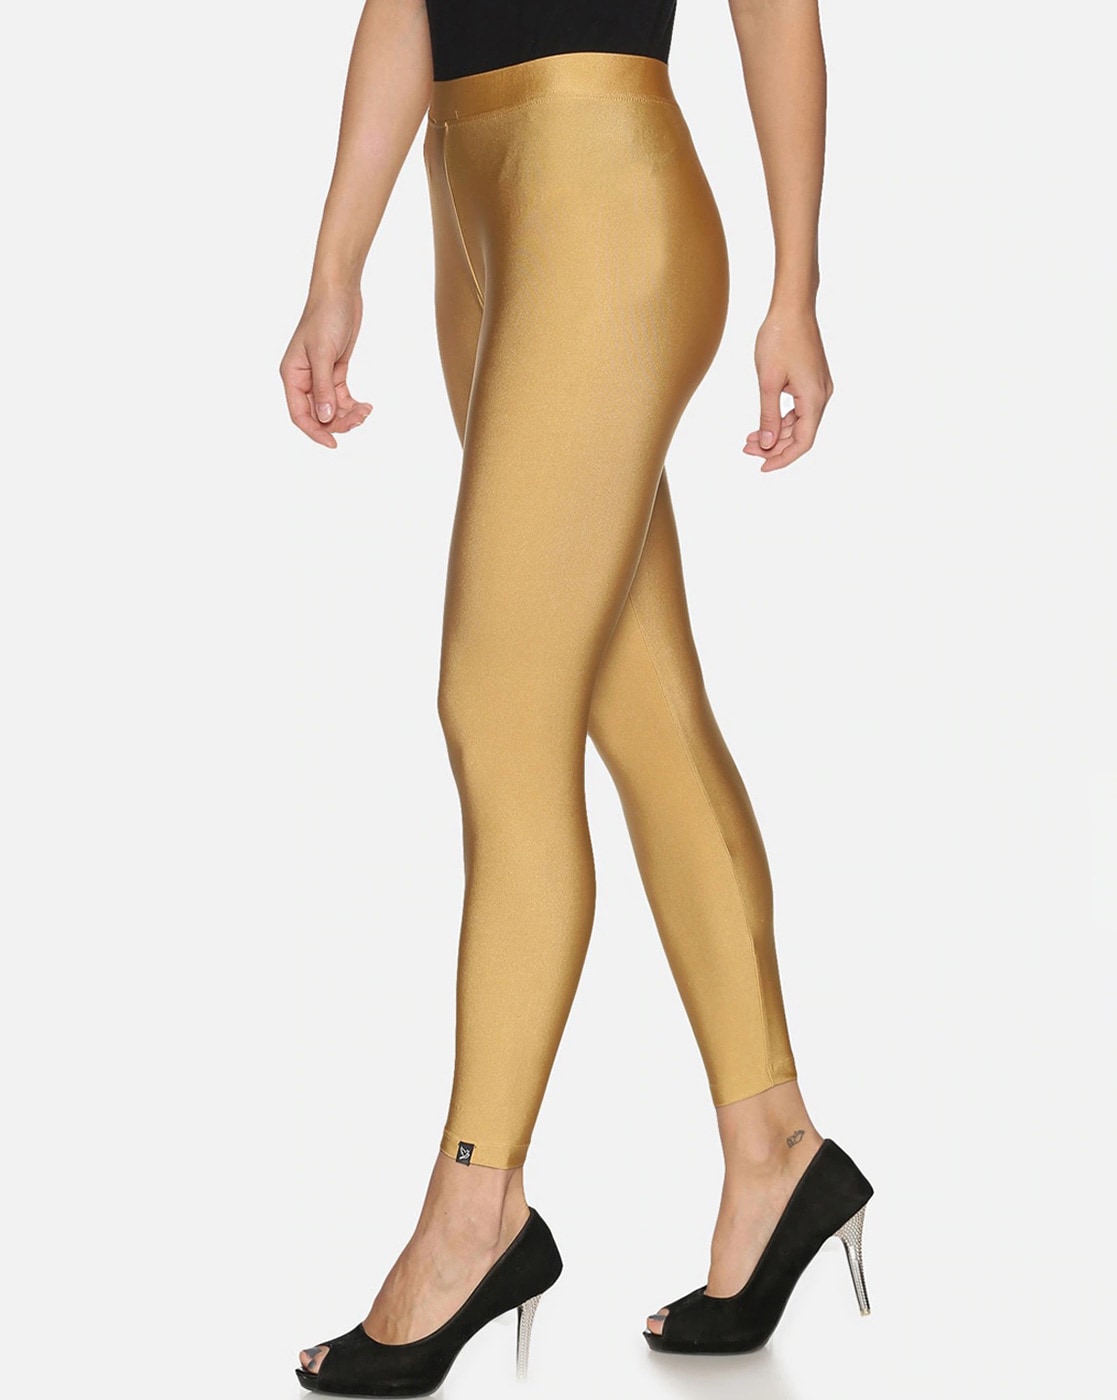 ALL Color Lycra Golden Color Leggings, Size: All at Rs 150 in Tiruppur